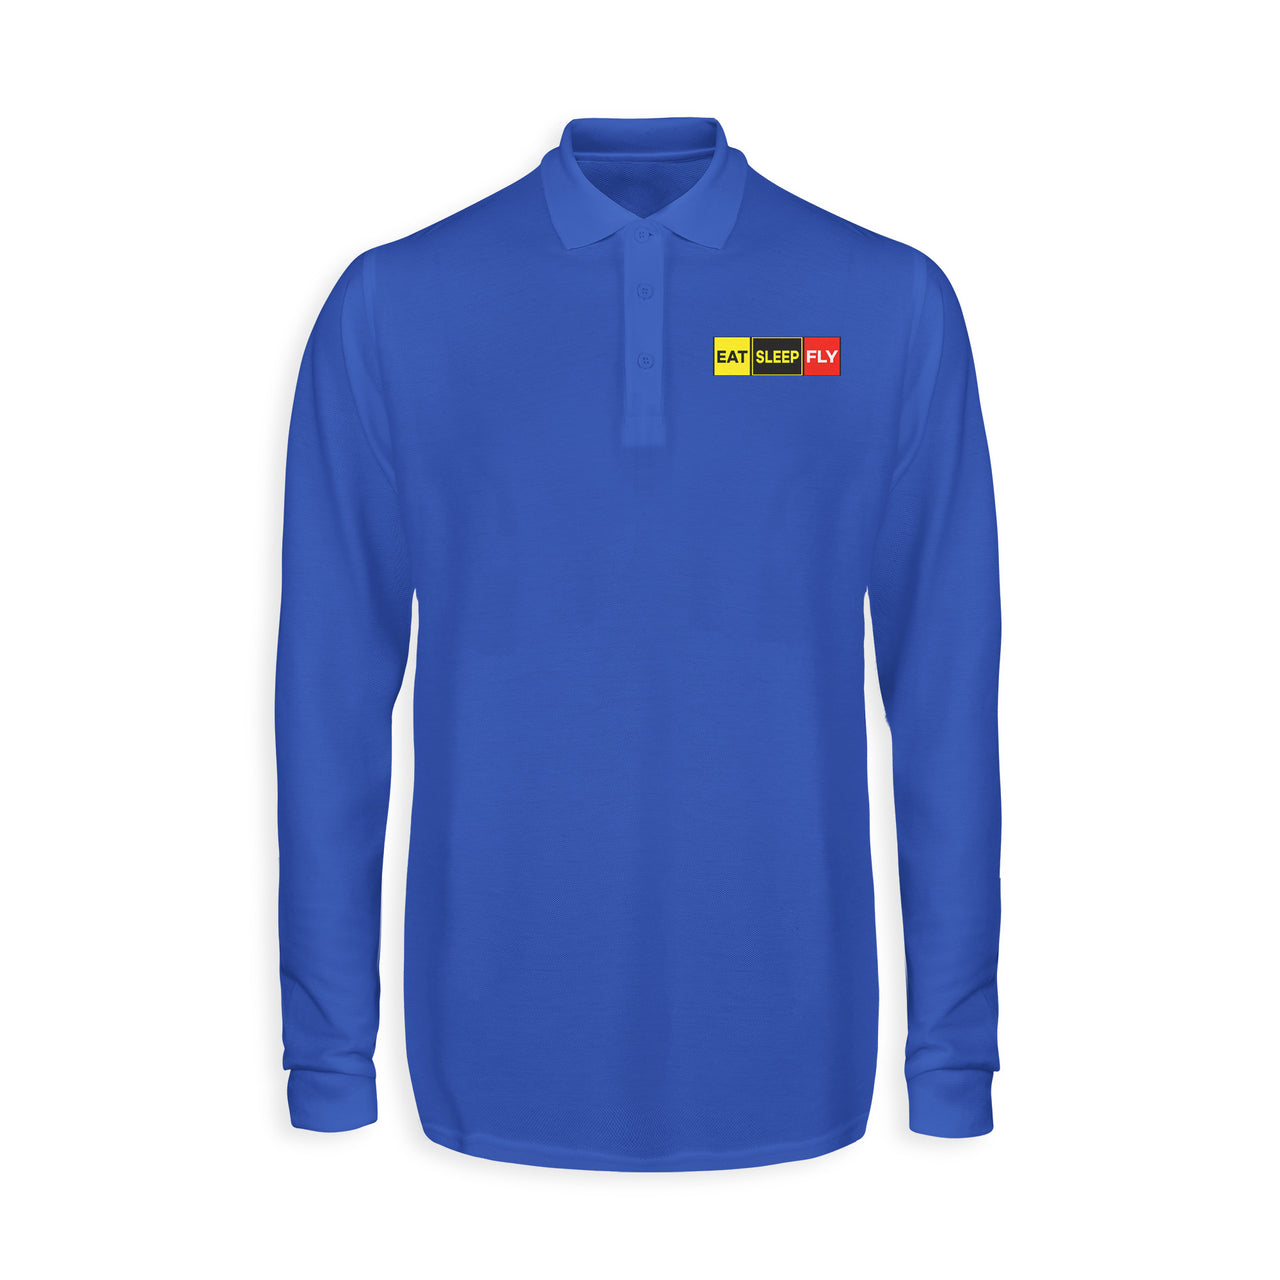 Eat Sleep Fly (Colourful) Designed Long Sleeve Polo T-Shirts